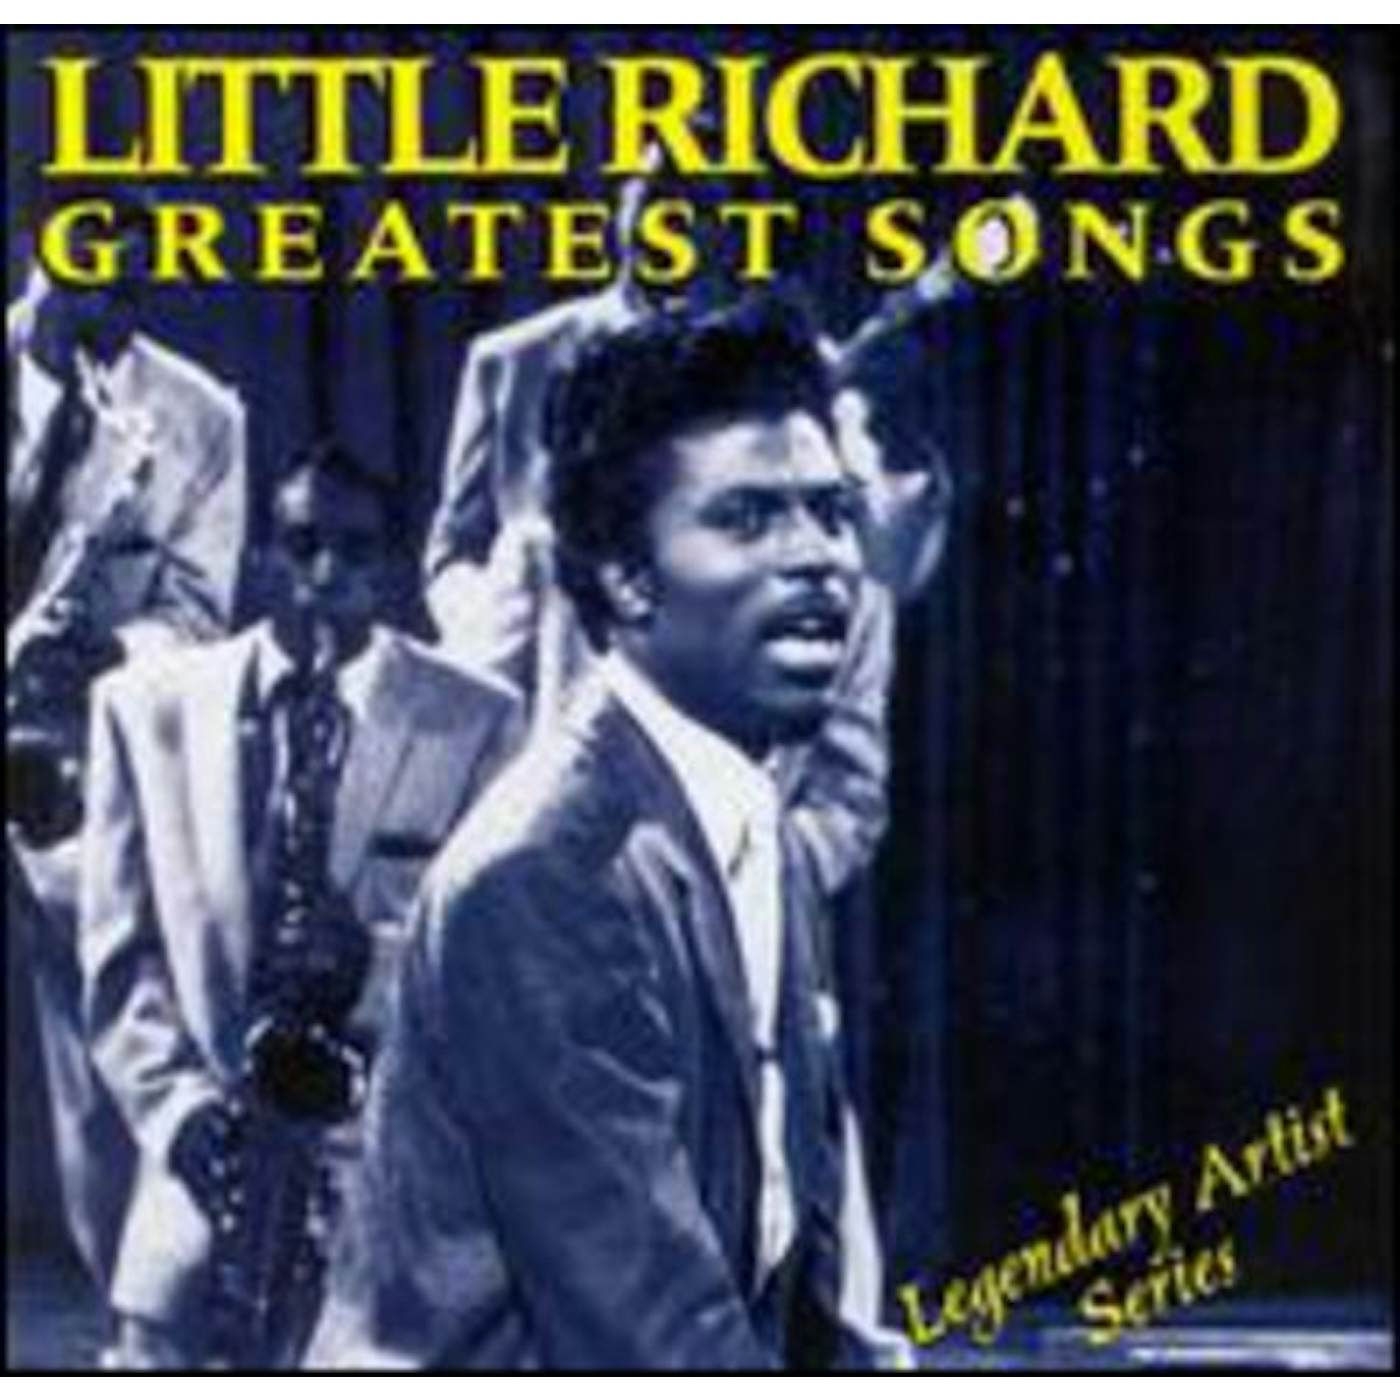 Little Richard GREATEST SONGS CD